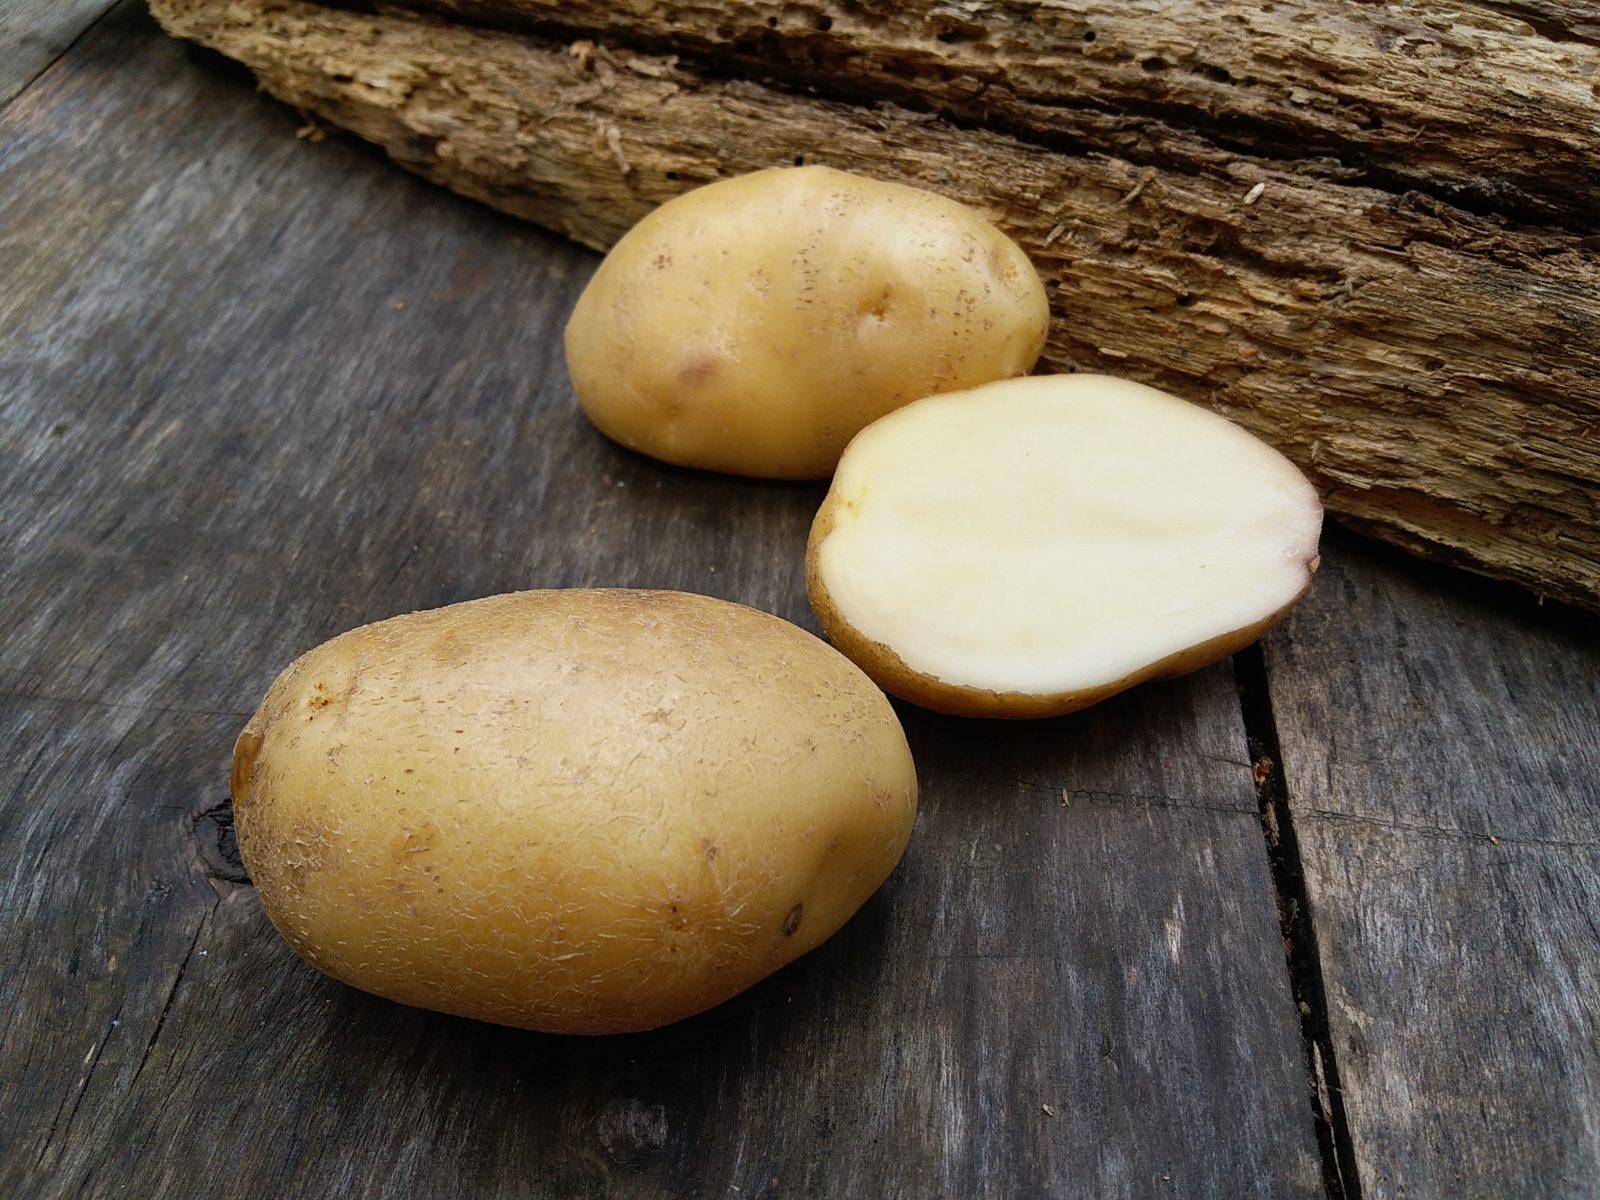 Картофель лорх: характеристика и особенности сорта